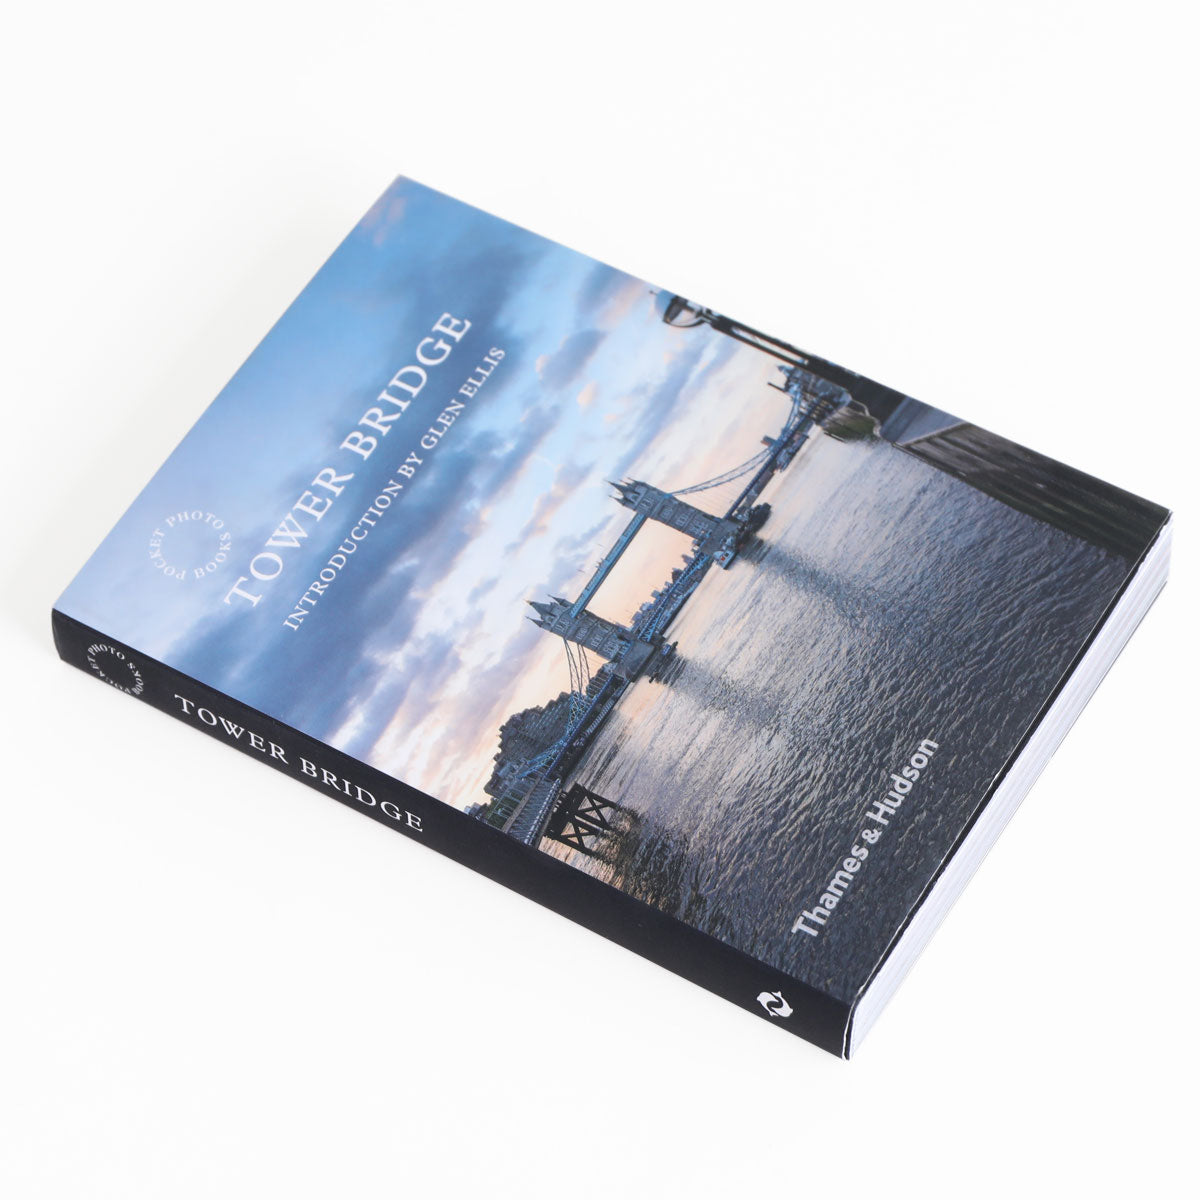 Tower Bridge Pocket Photo Book 2